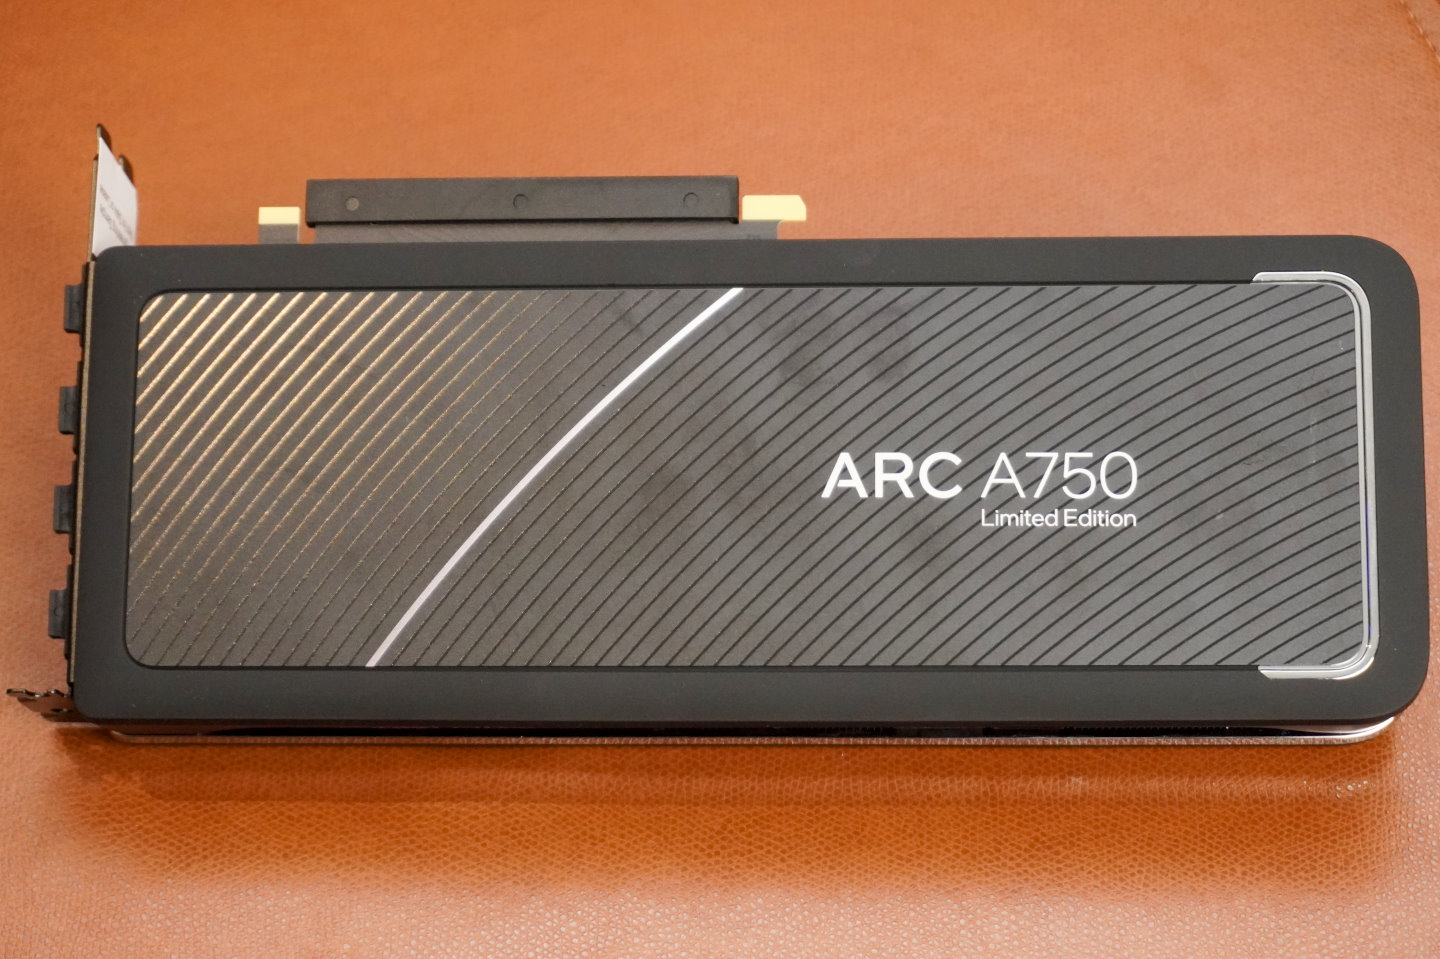 Arc A750的造型與Arc A770相當接近，不過整張顯示卡都沒有RGB燈光功能。